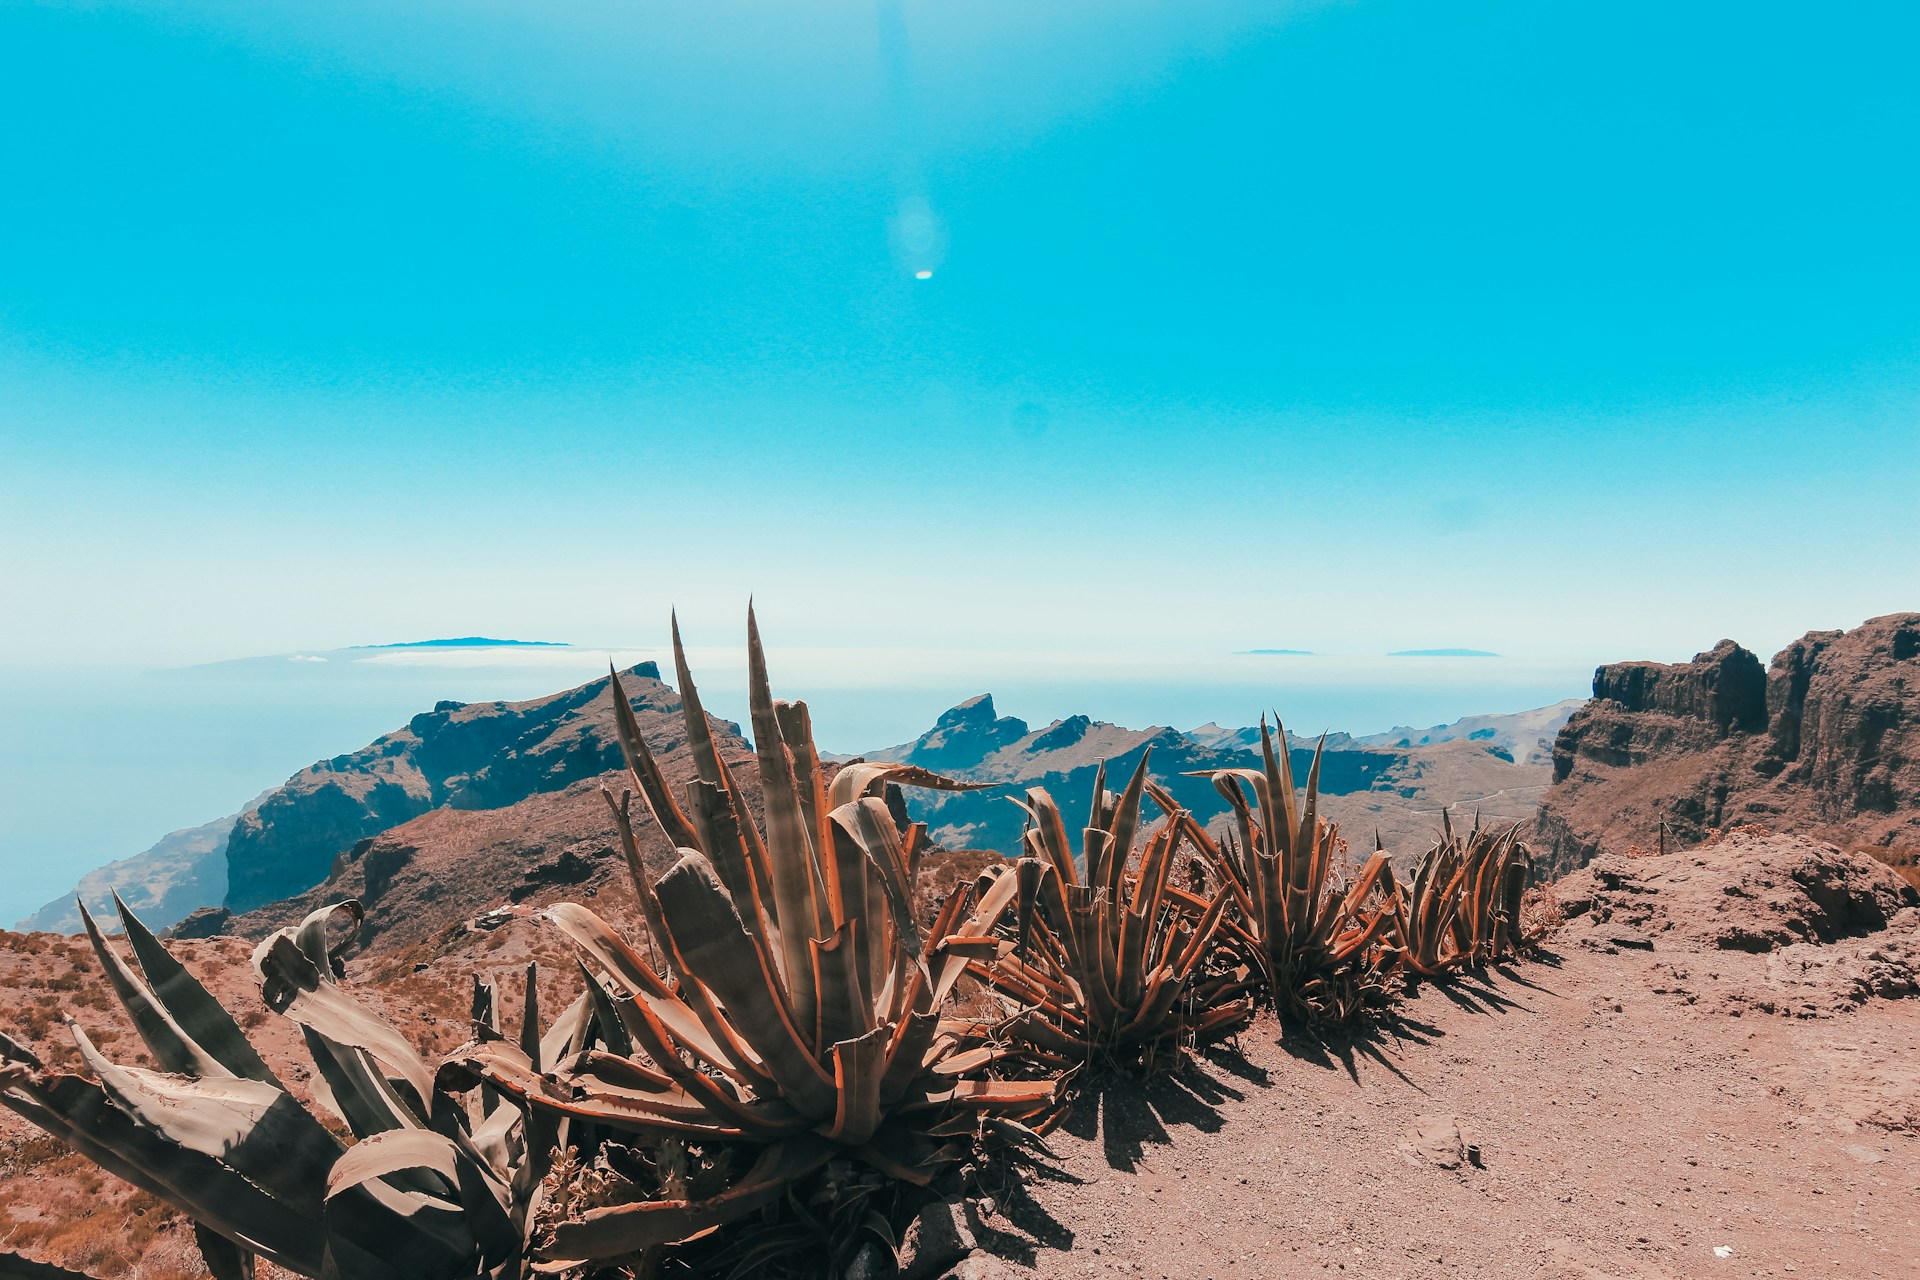 Aloe plants growing on sandy cliff edges in Tenerife.